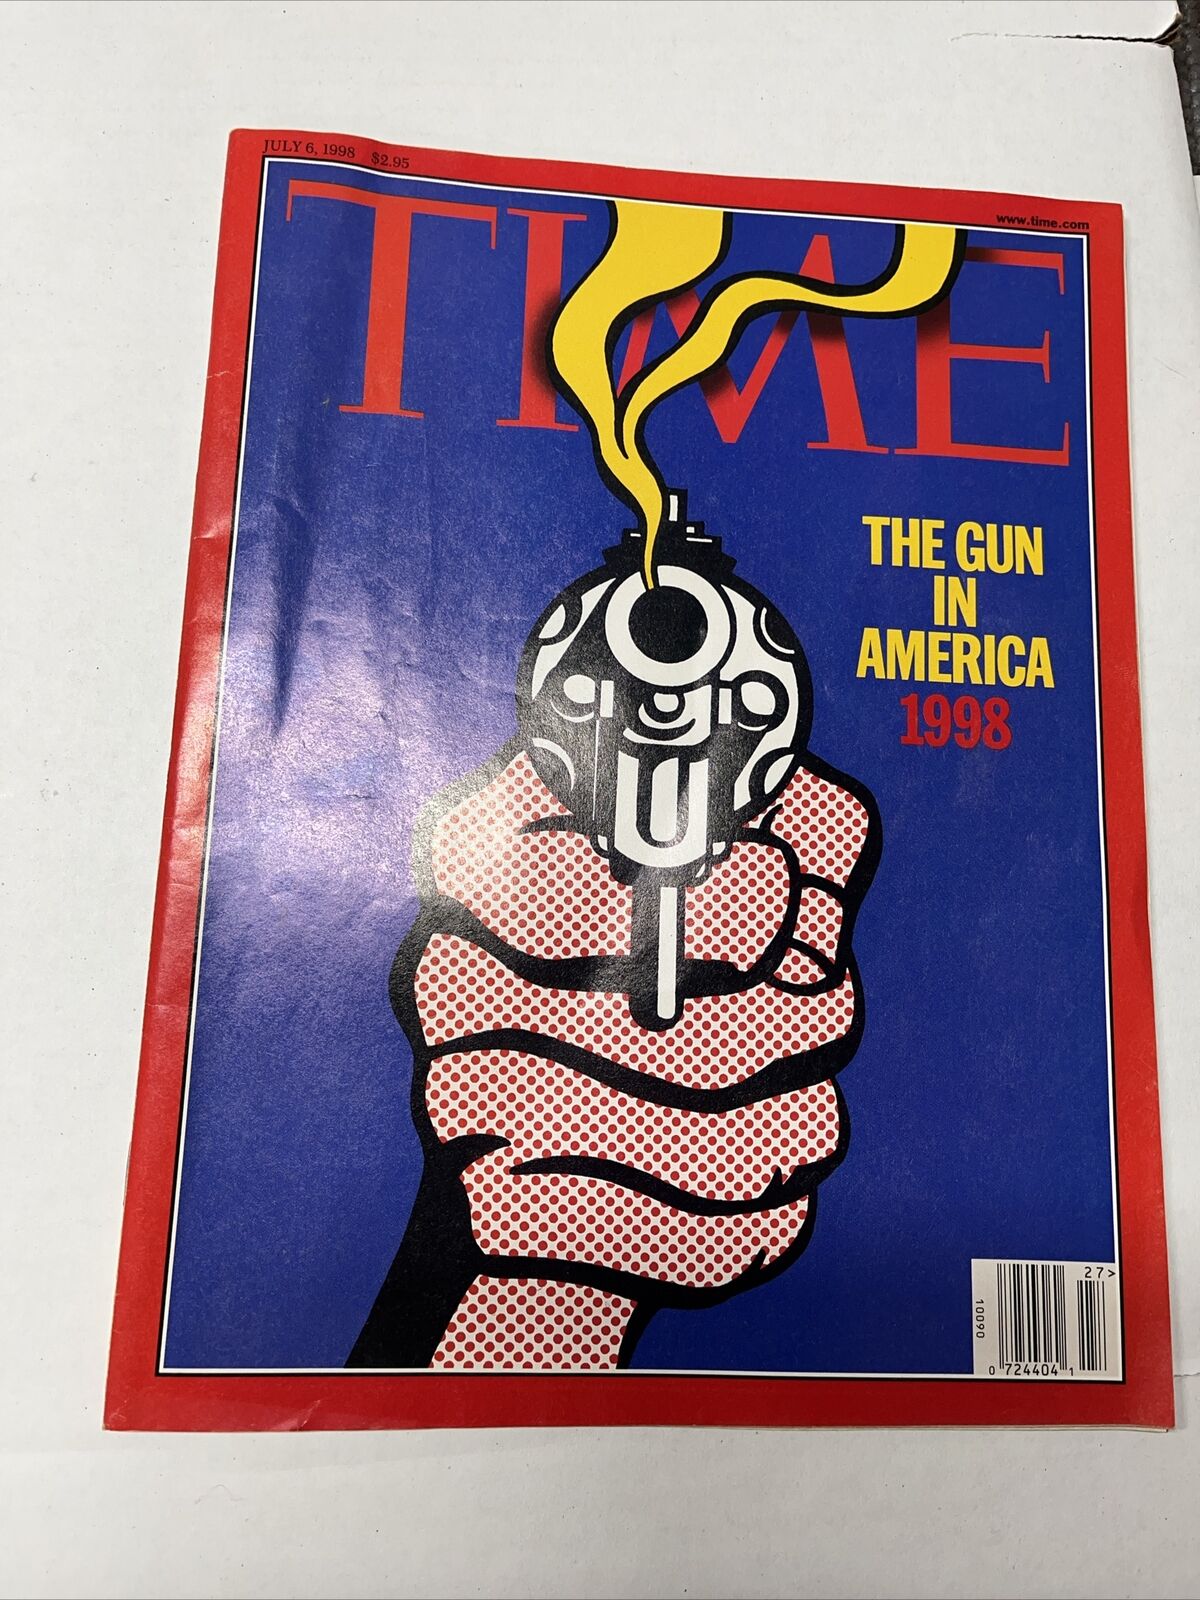 TIME MAGAZINE THE GUN IN AMERICA 1998 JULY 6, 1998 